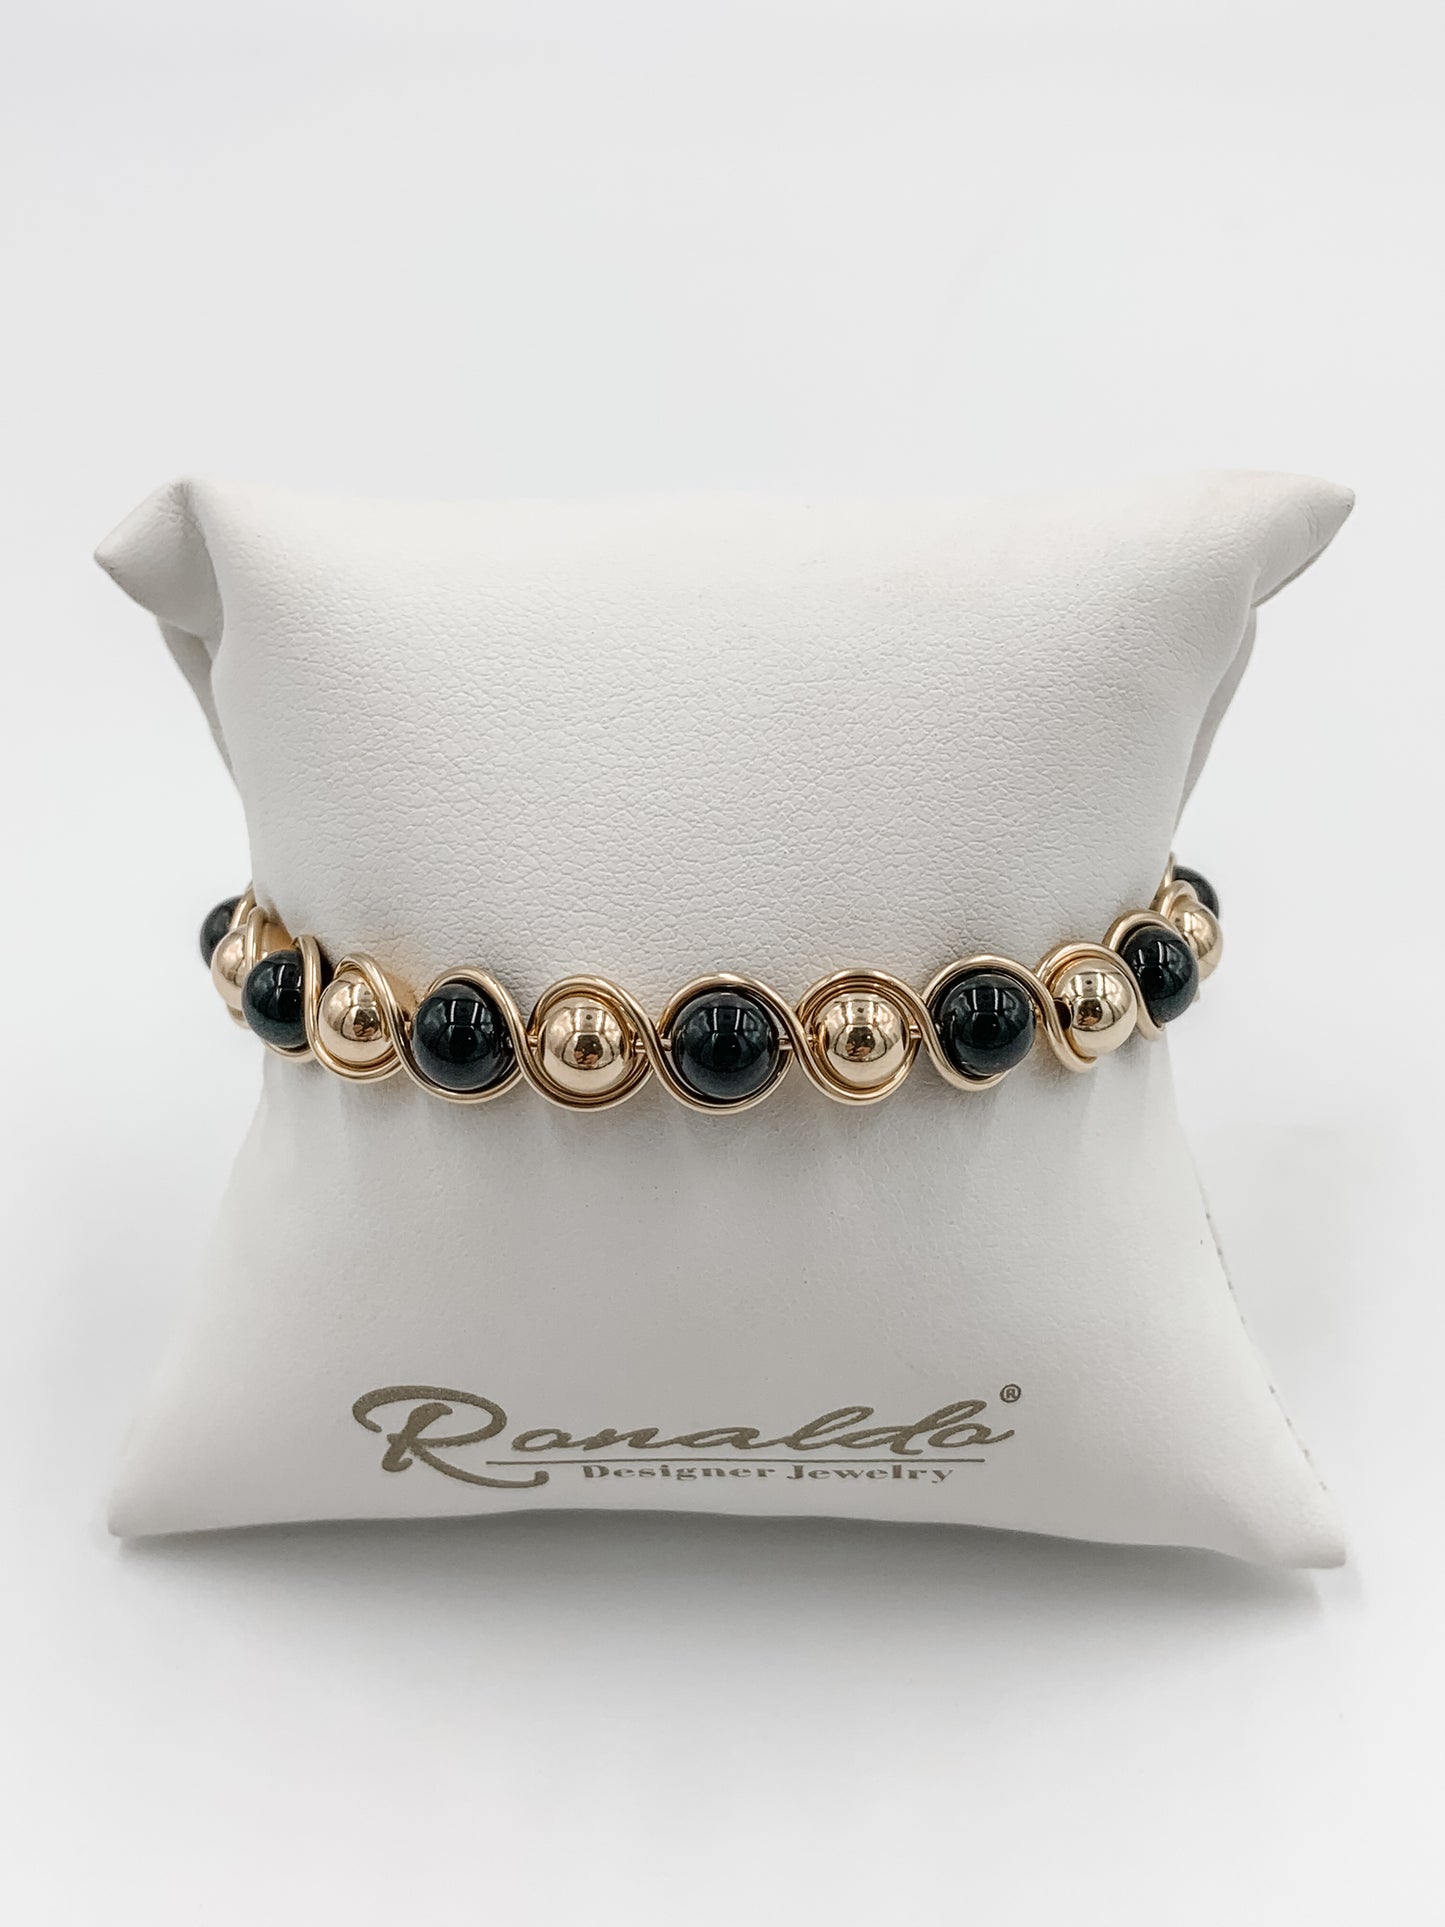 Onyx Gold Filled Bead Bracelet